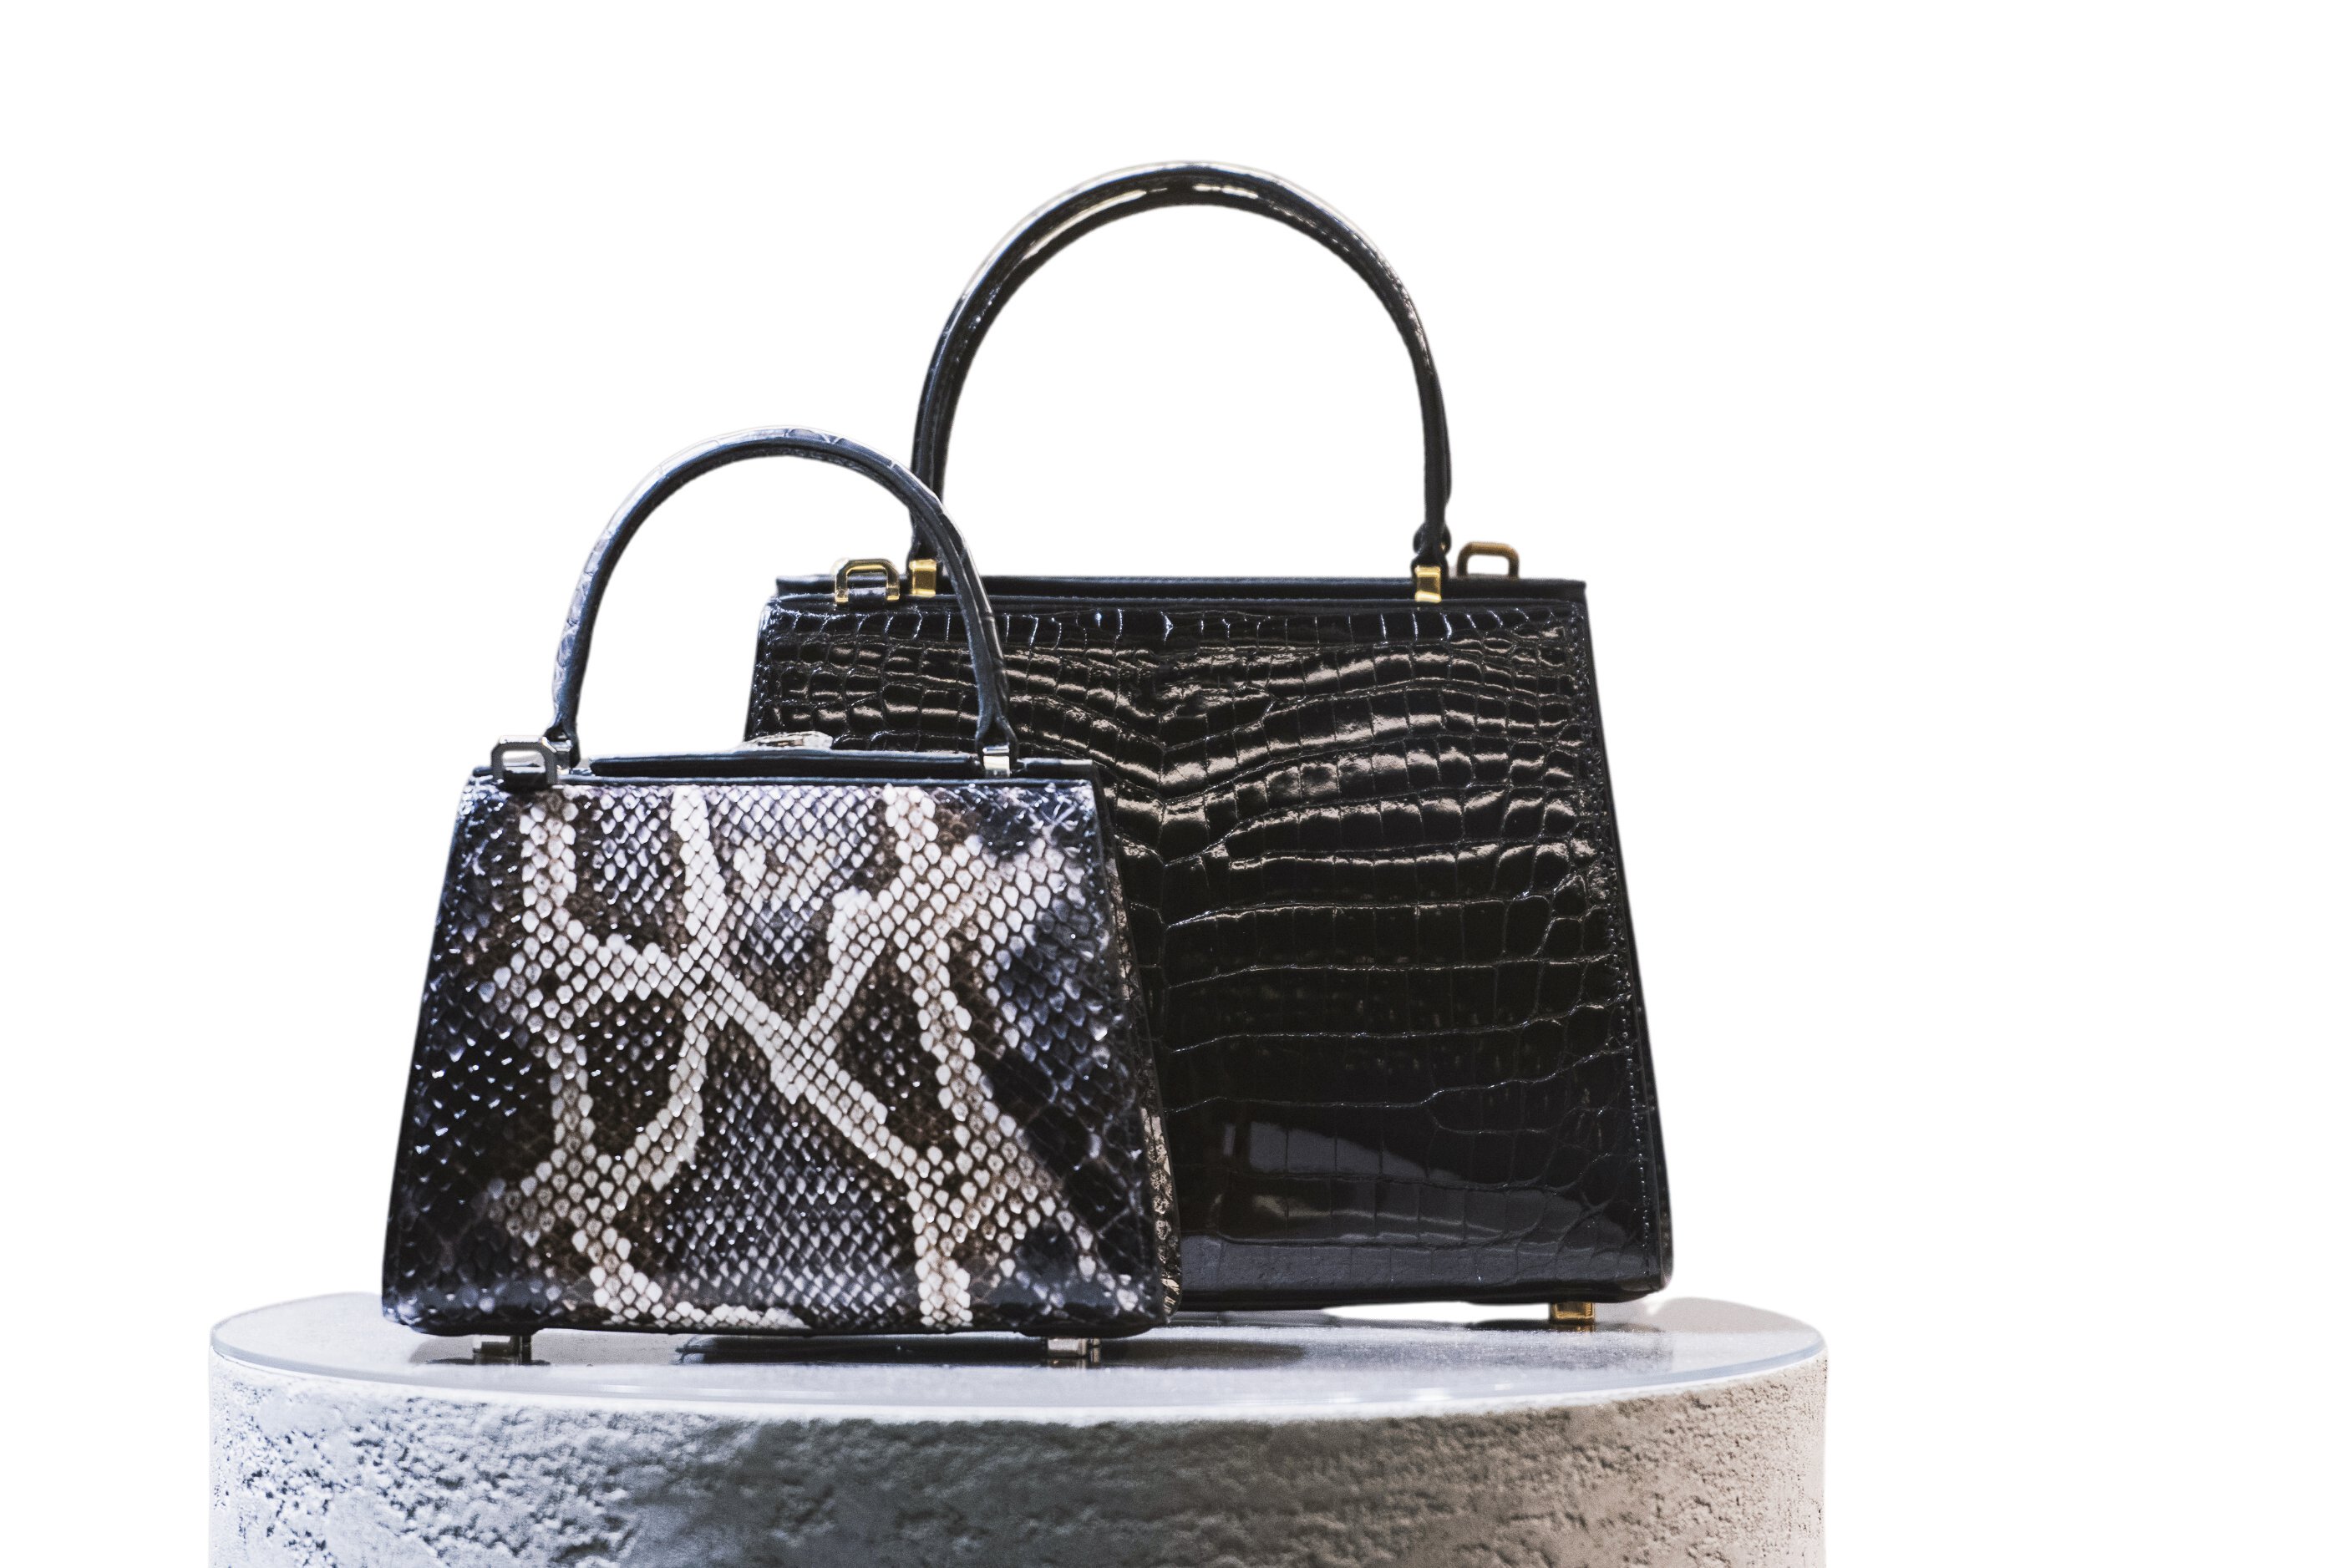 Luxury handbags © Creative Lab/Shutterstock